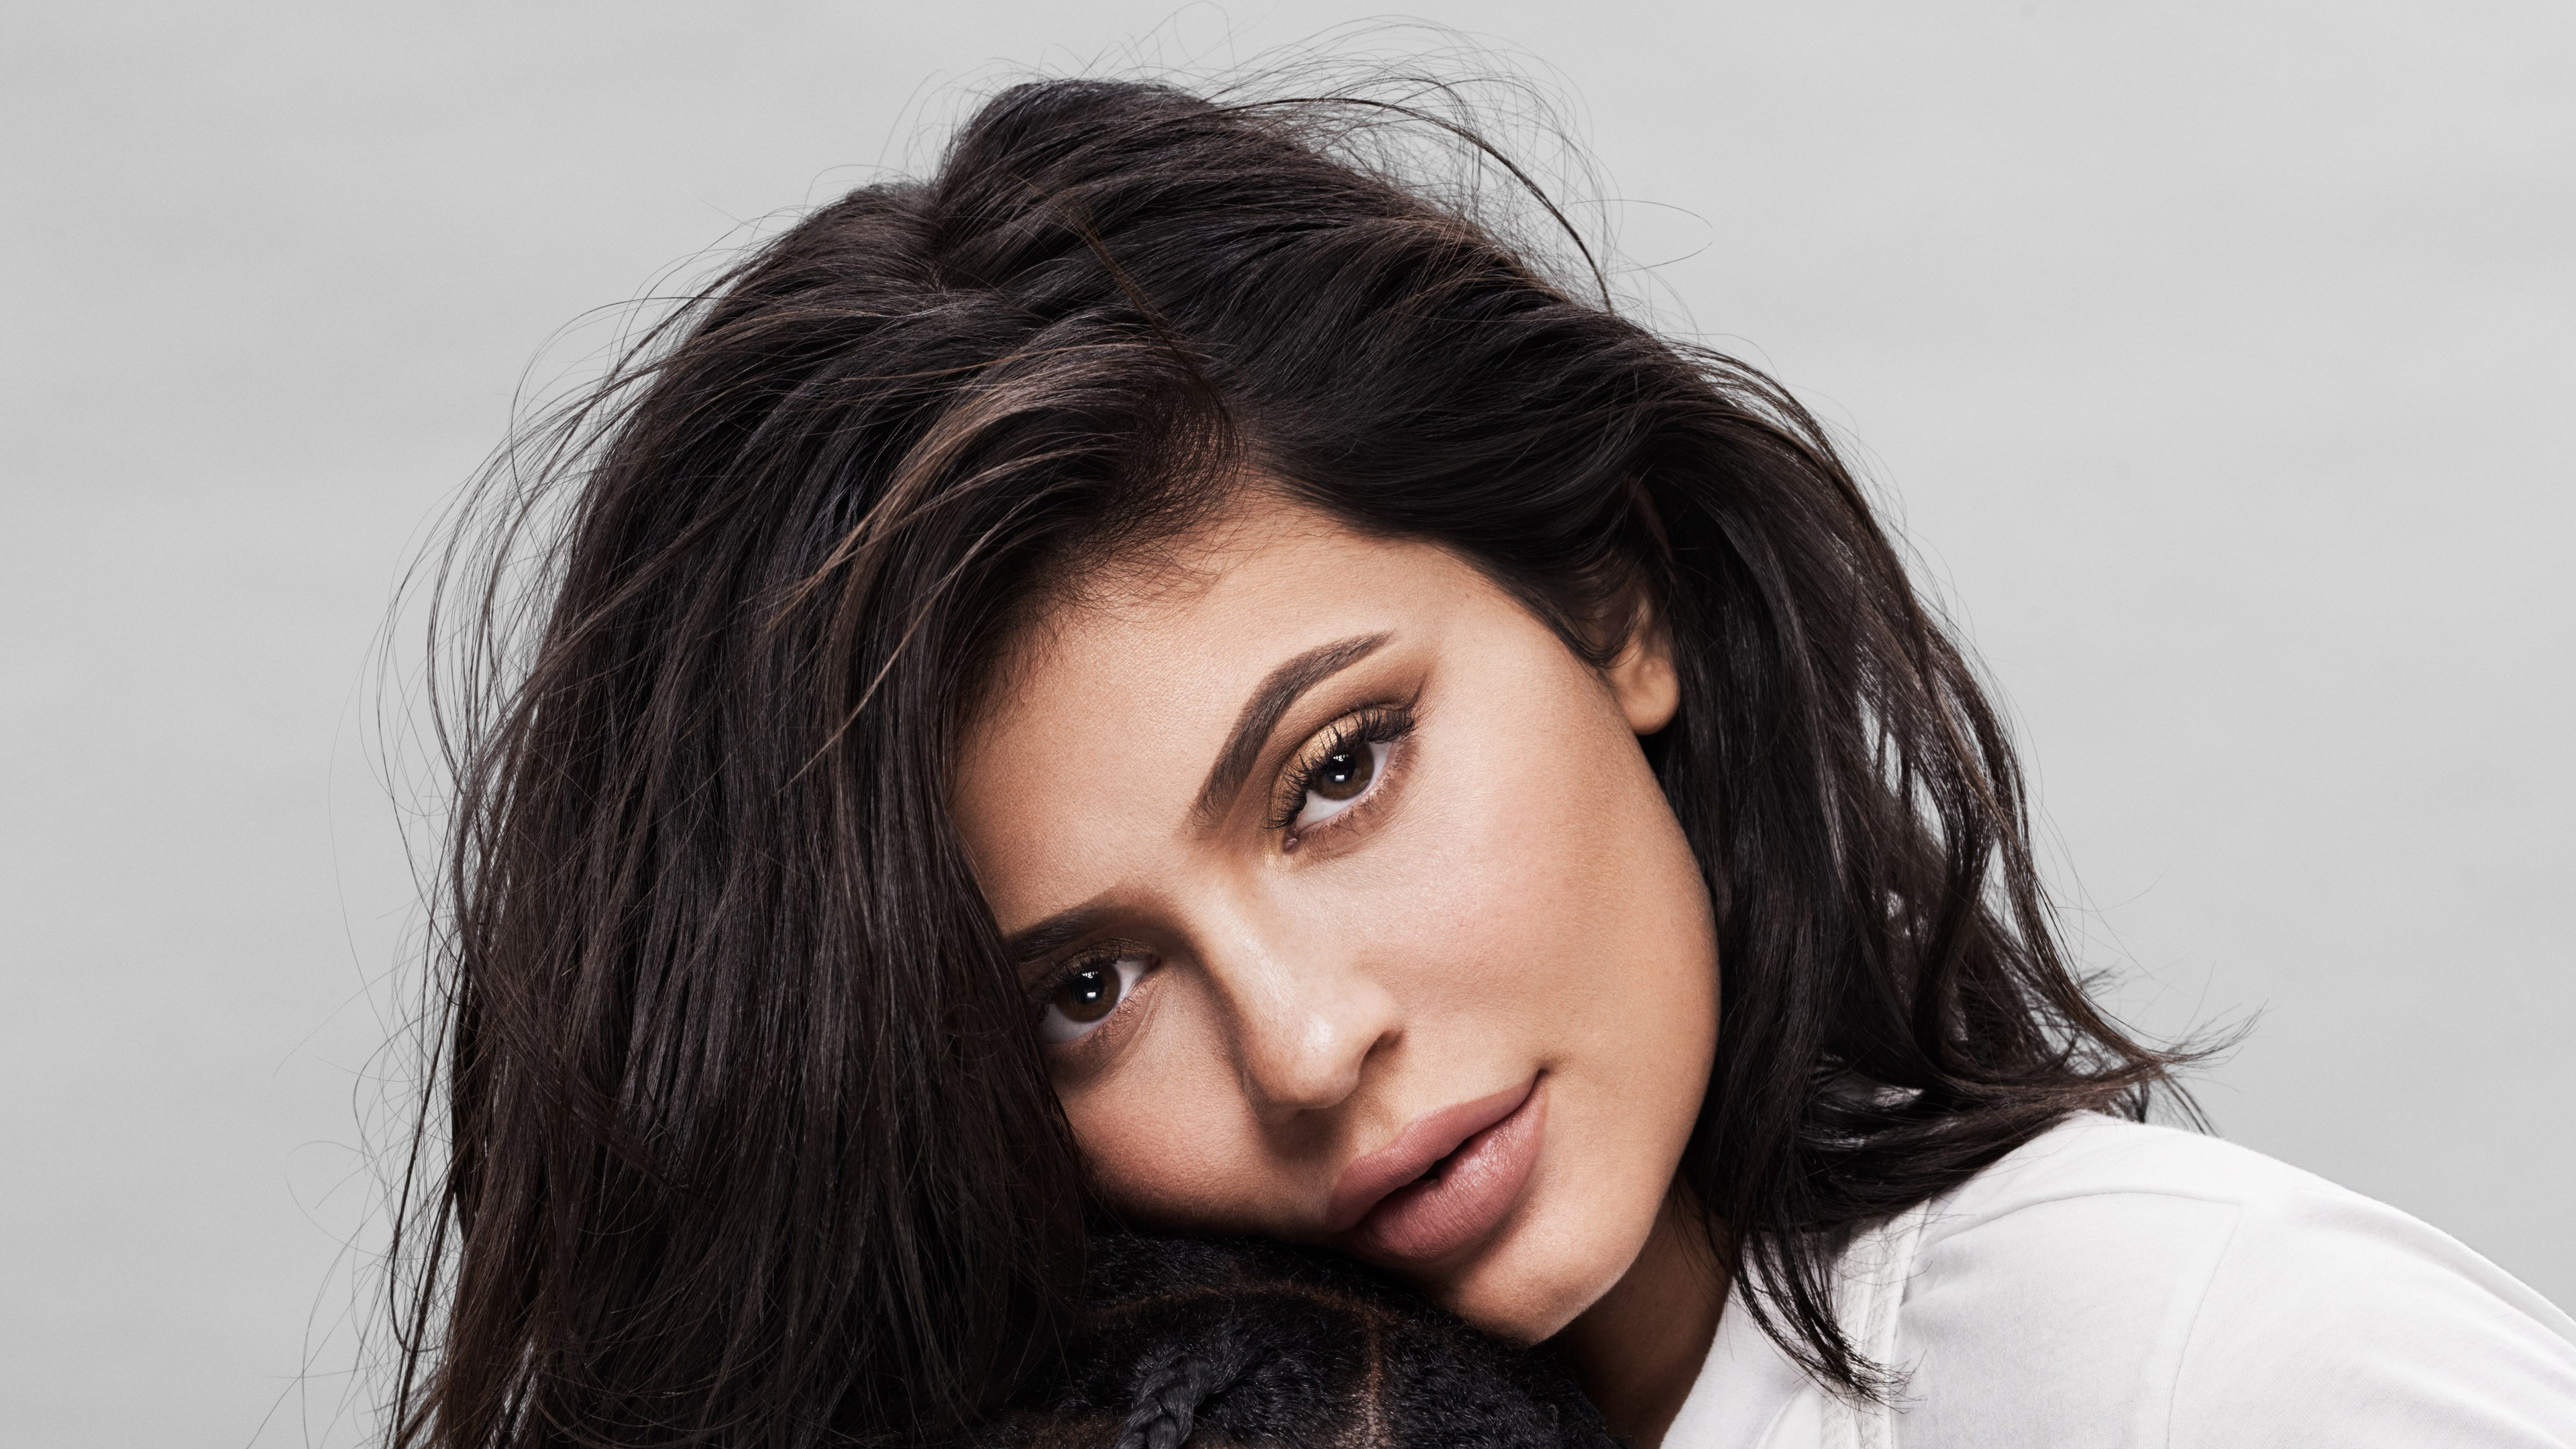 Kylie Jenner GQ 4k, HD Celebrities, 4k Wallpaper, Image